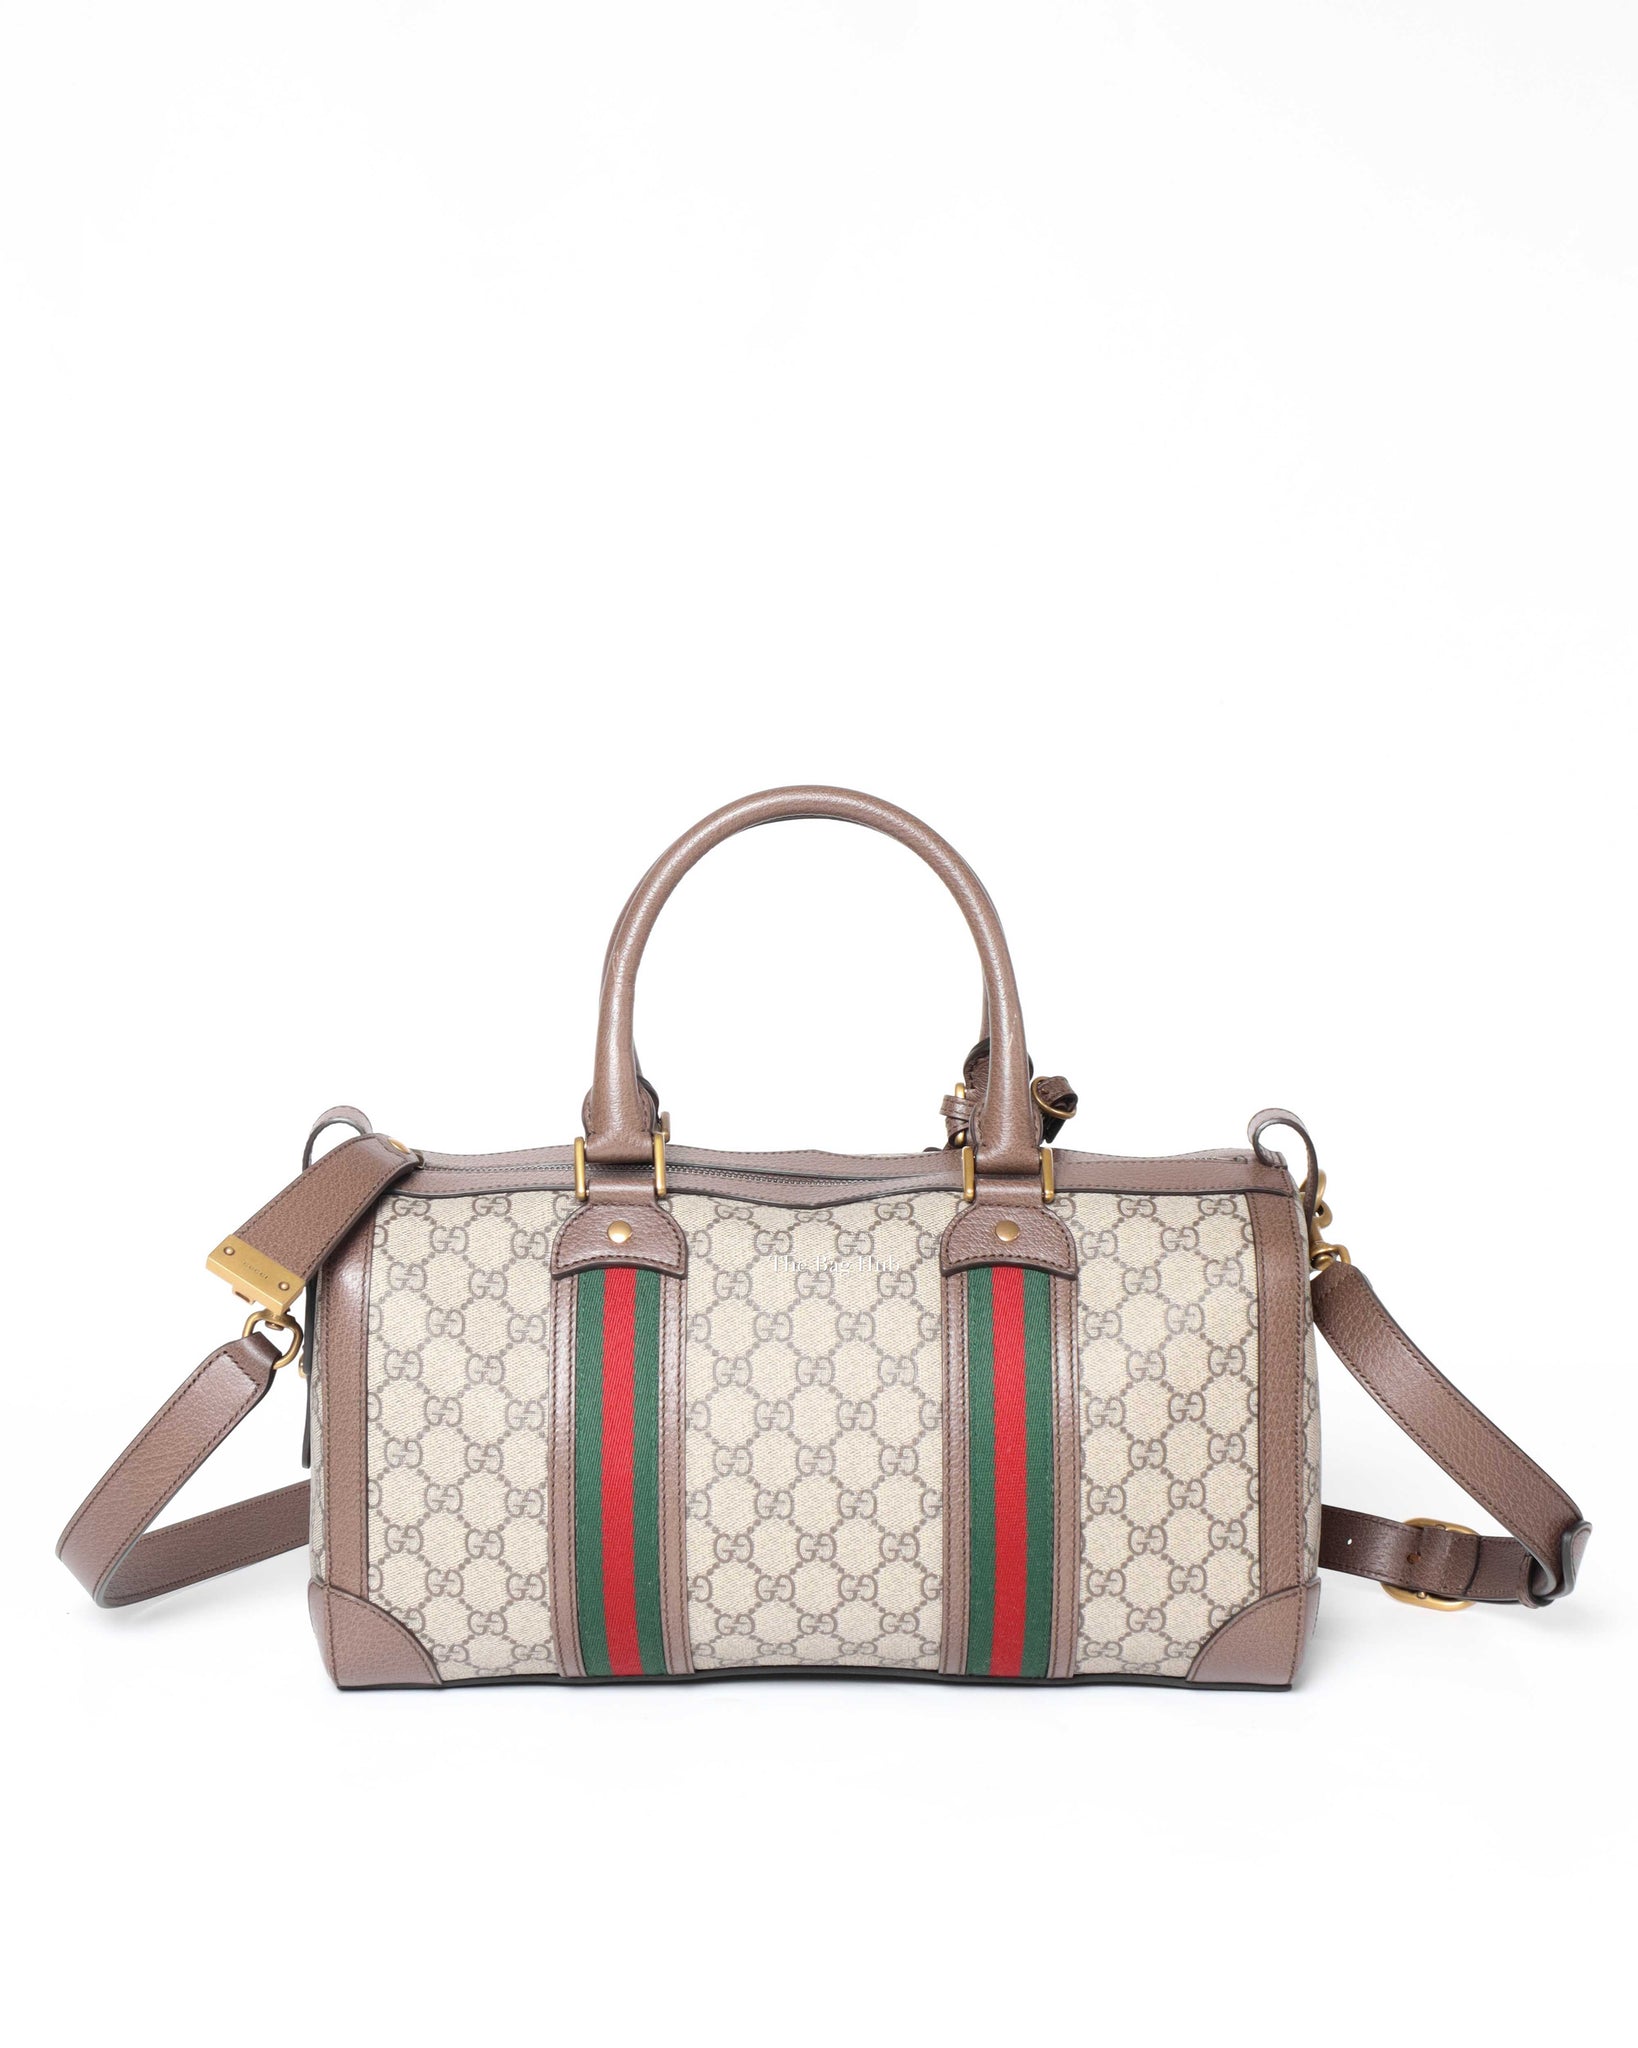 Gucci Brown GG Supreme Medium Duffle Bag